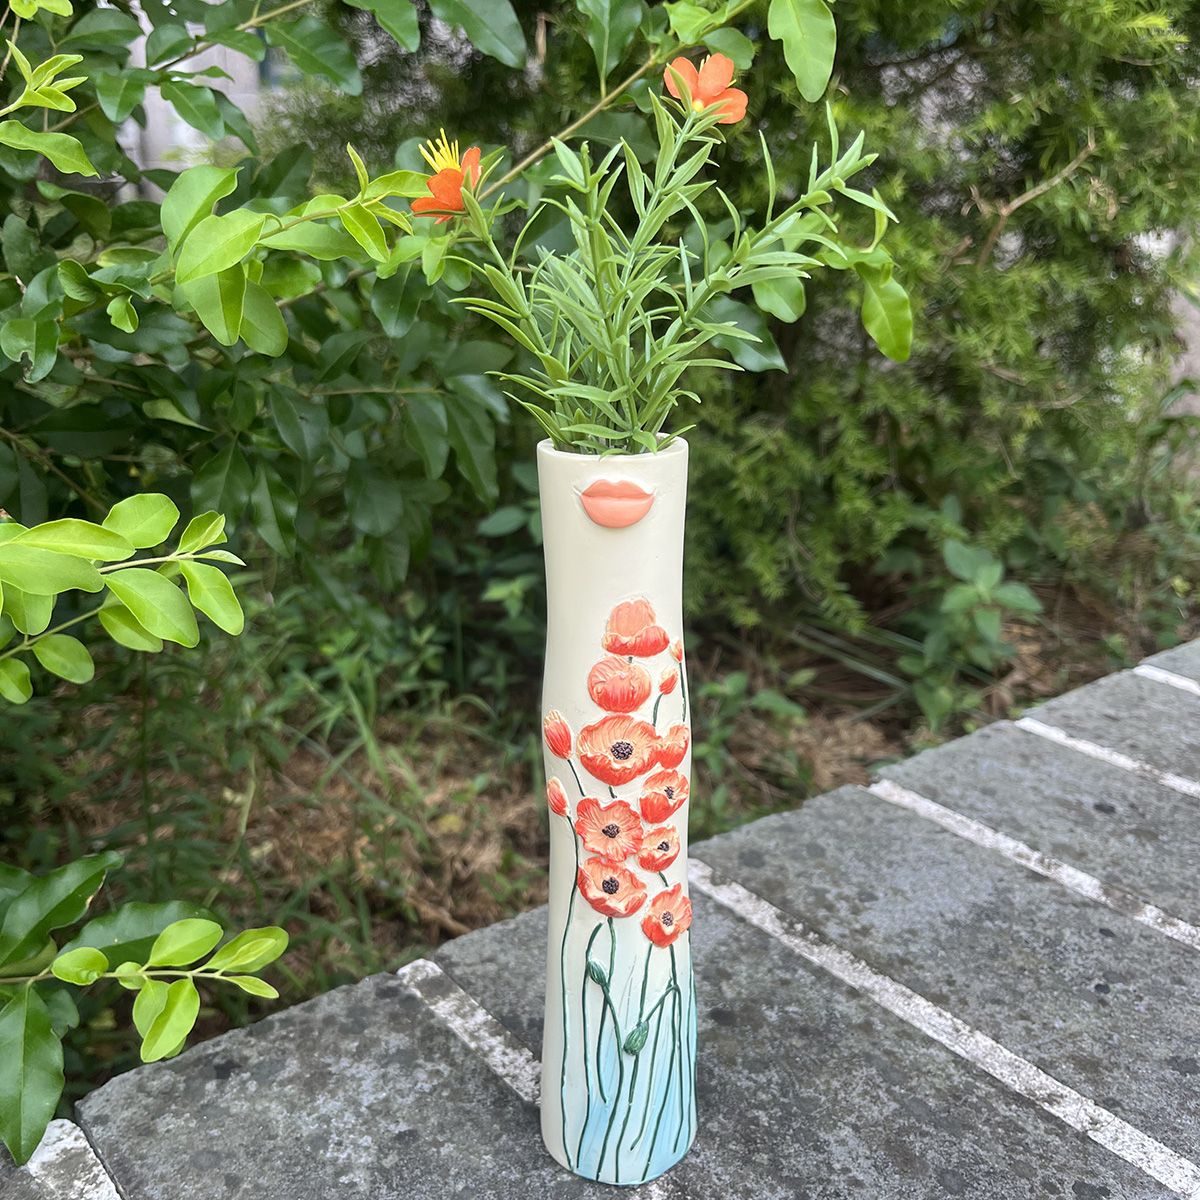 Flower Vase Photos for Sale 